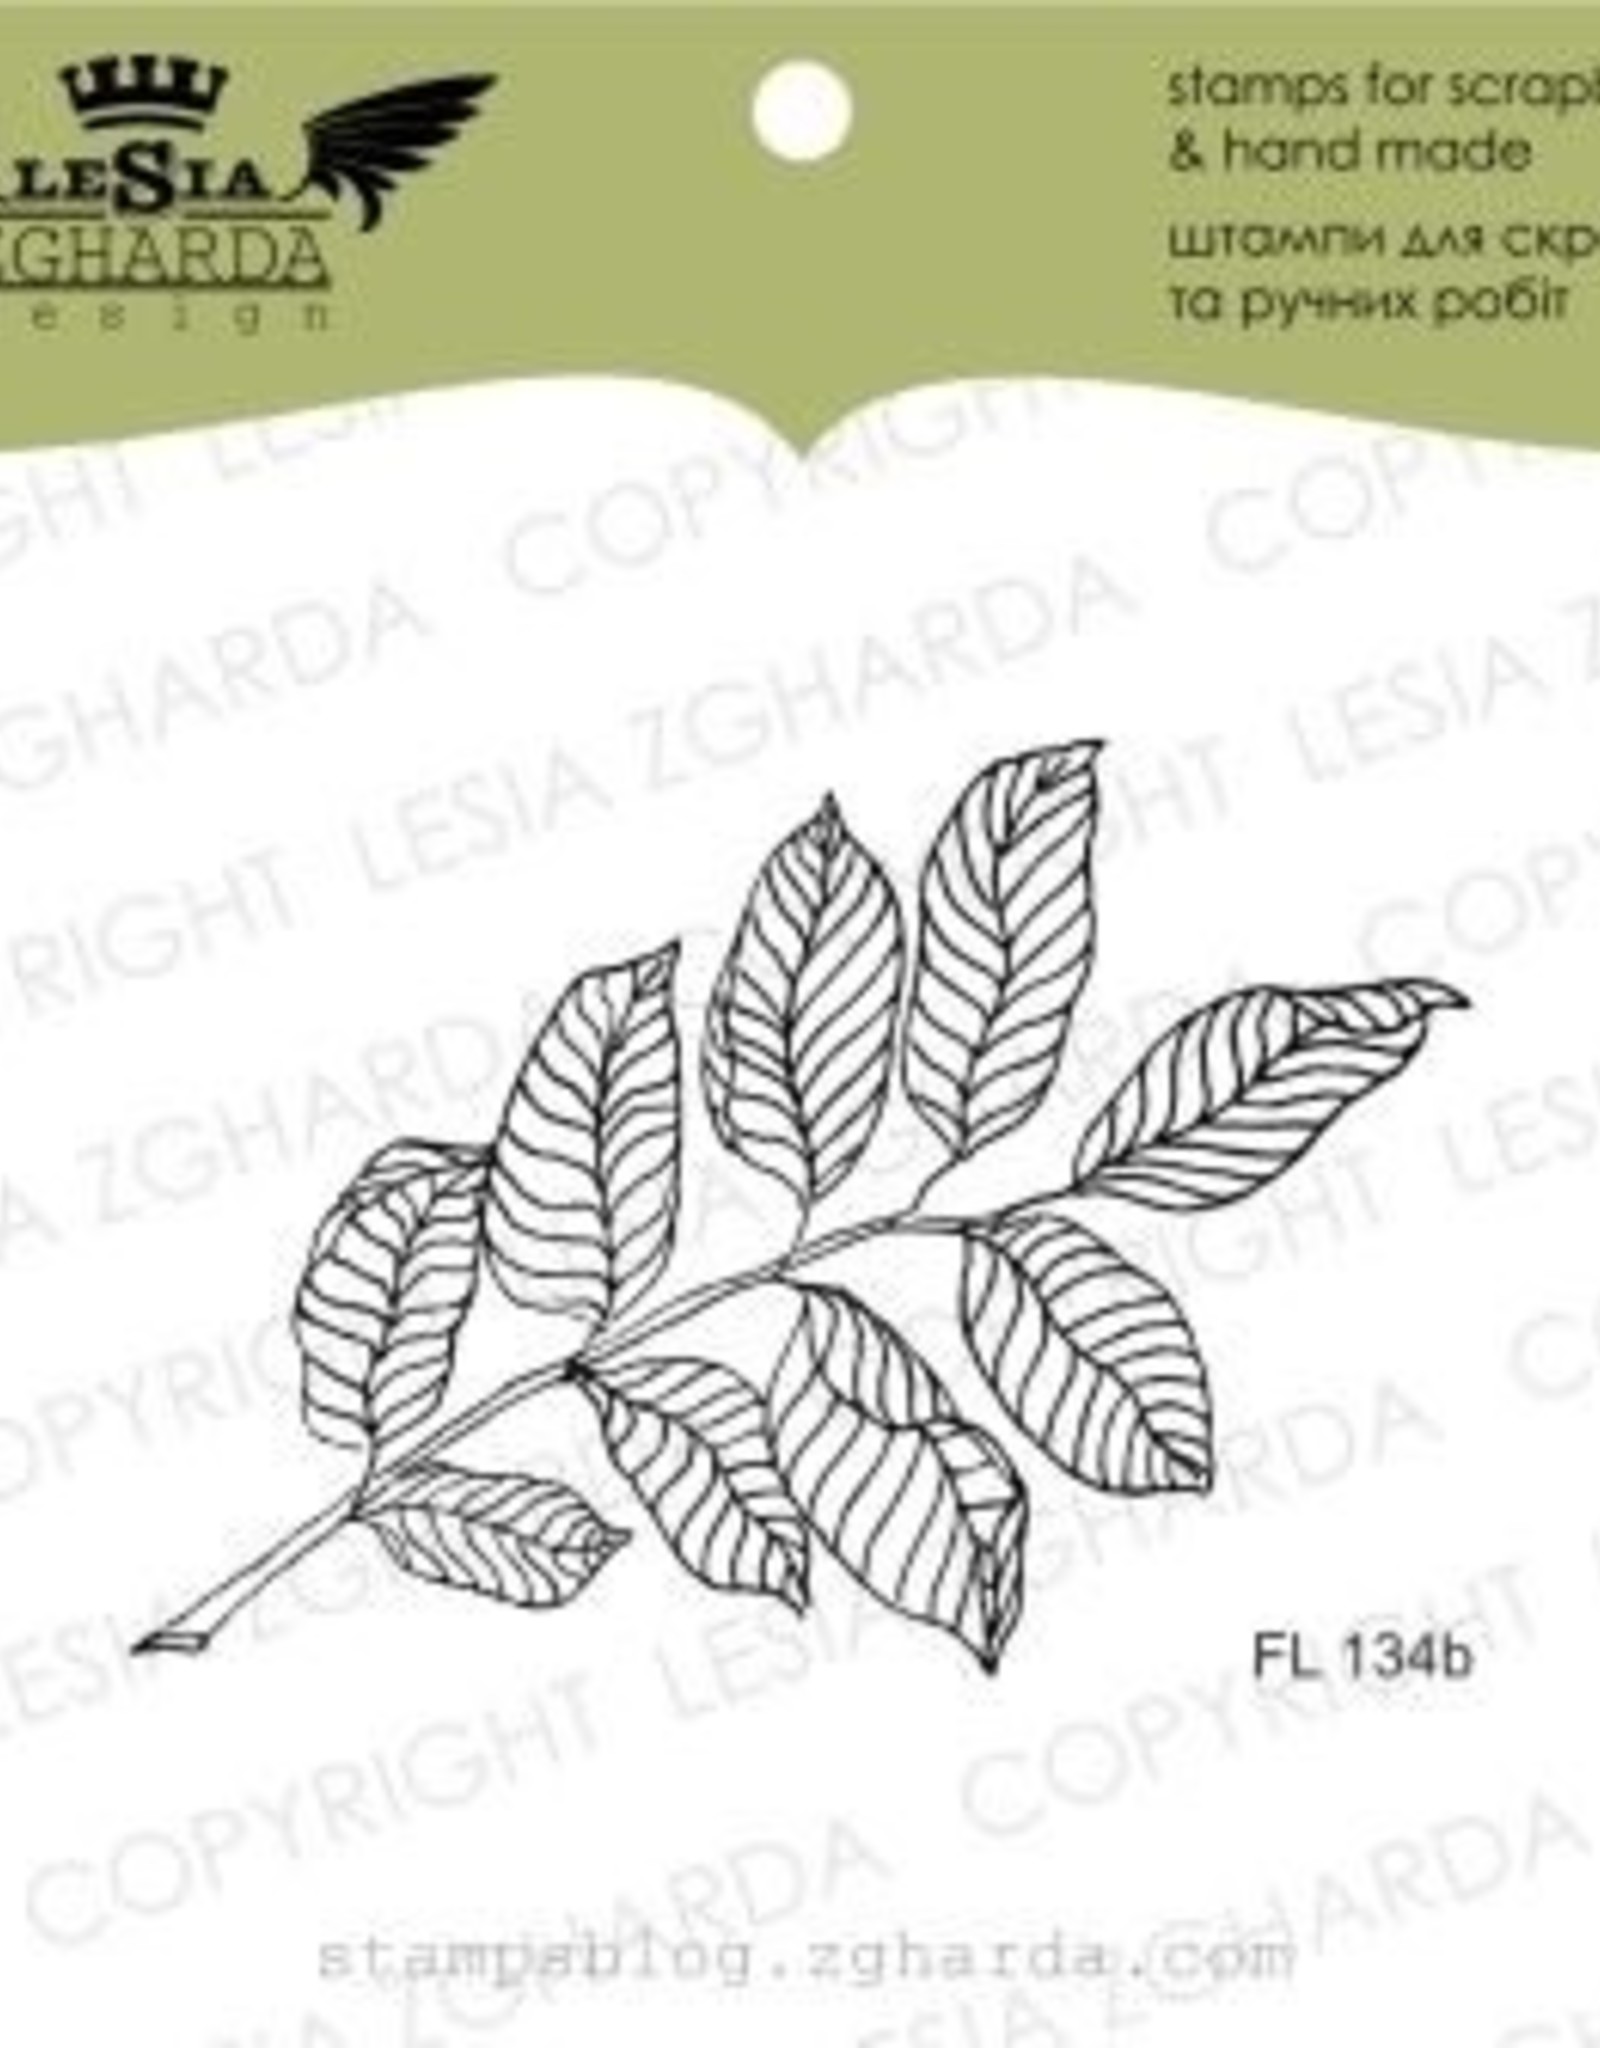 Lesia Zgharda Lesia Zgharda Design Stamp Branch with leaves (small) FL134b